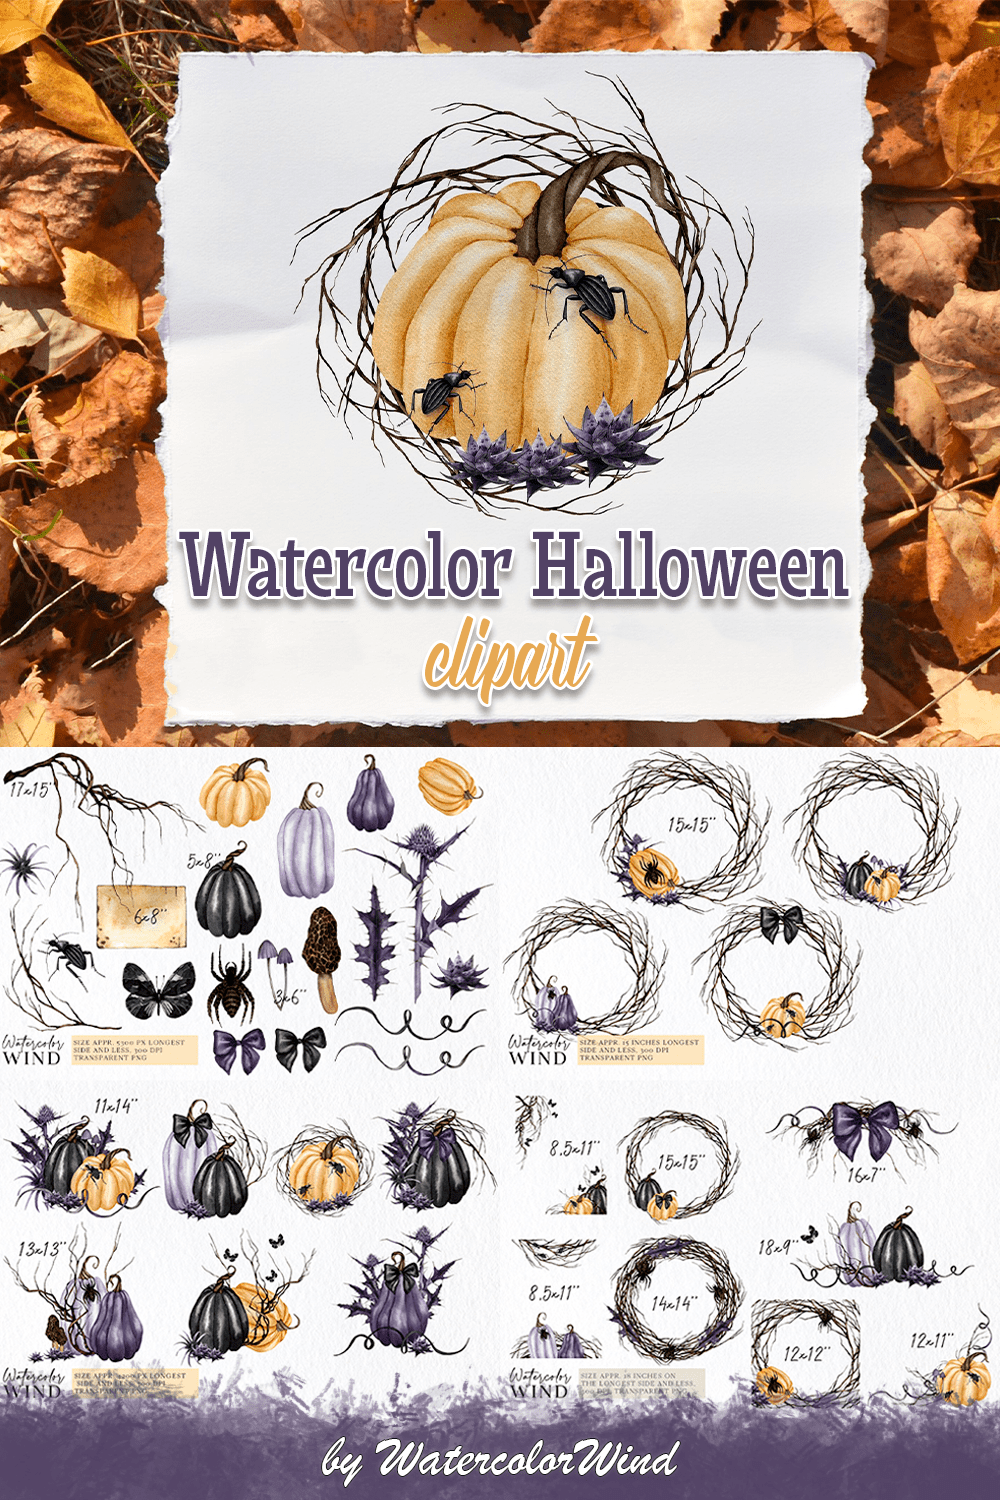 Typical watercolor halloween elements.